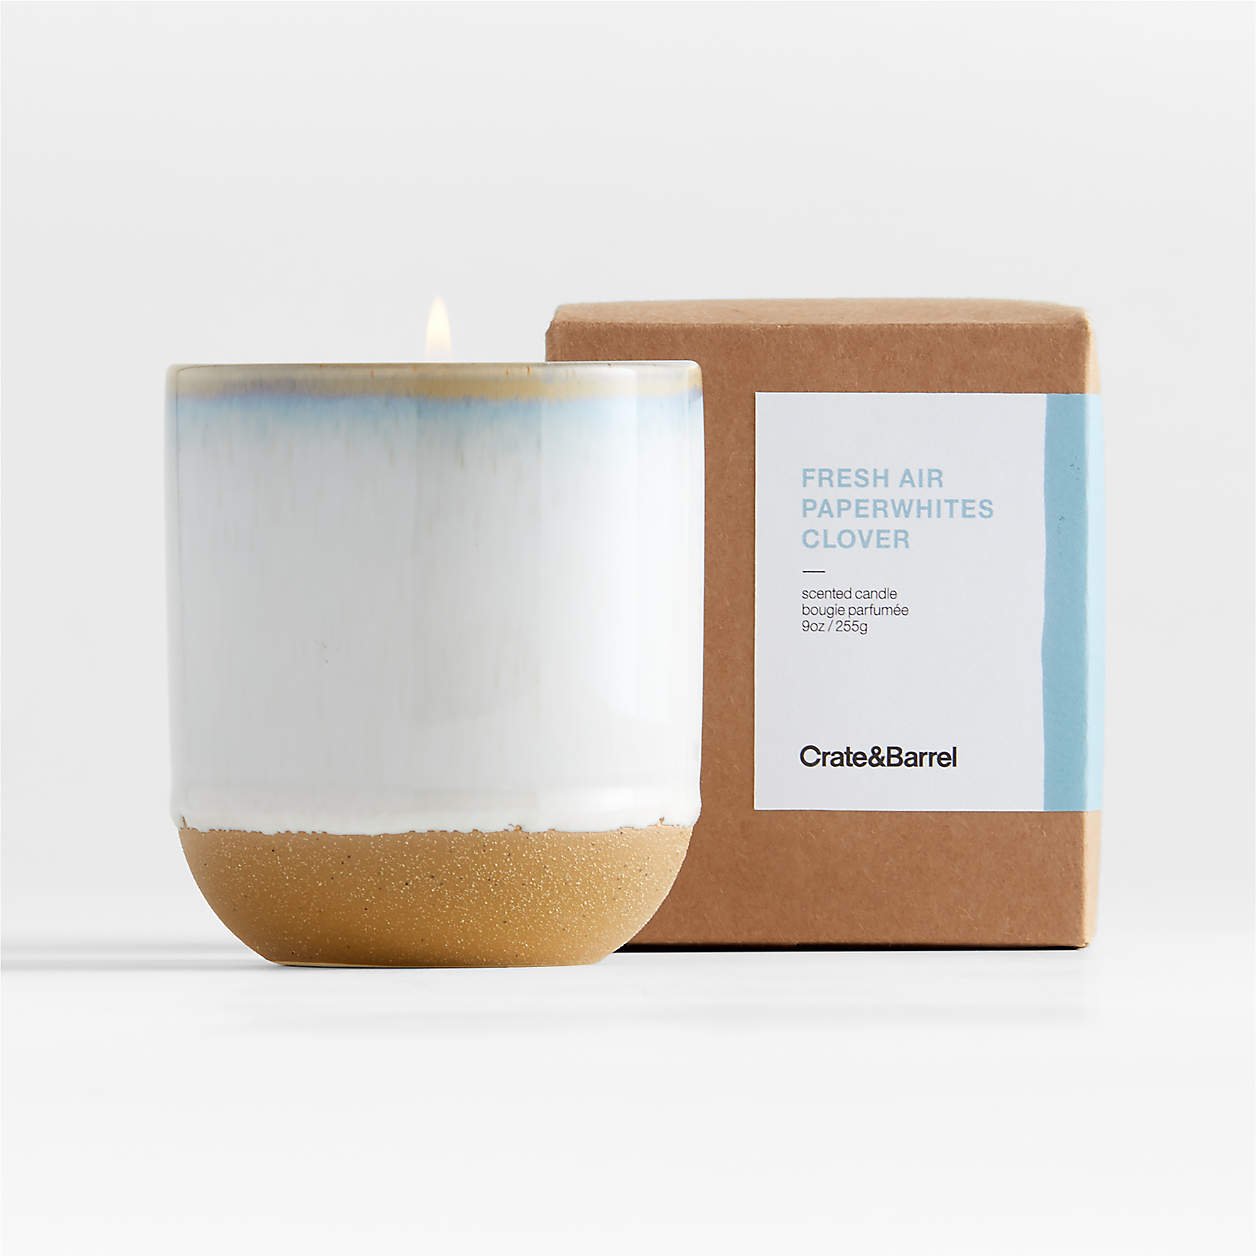 paperwhite-clove-fresh-air-scented-candle.jpg